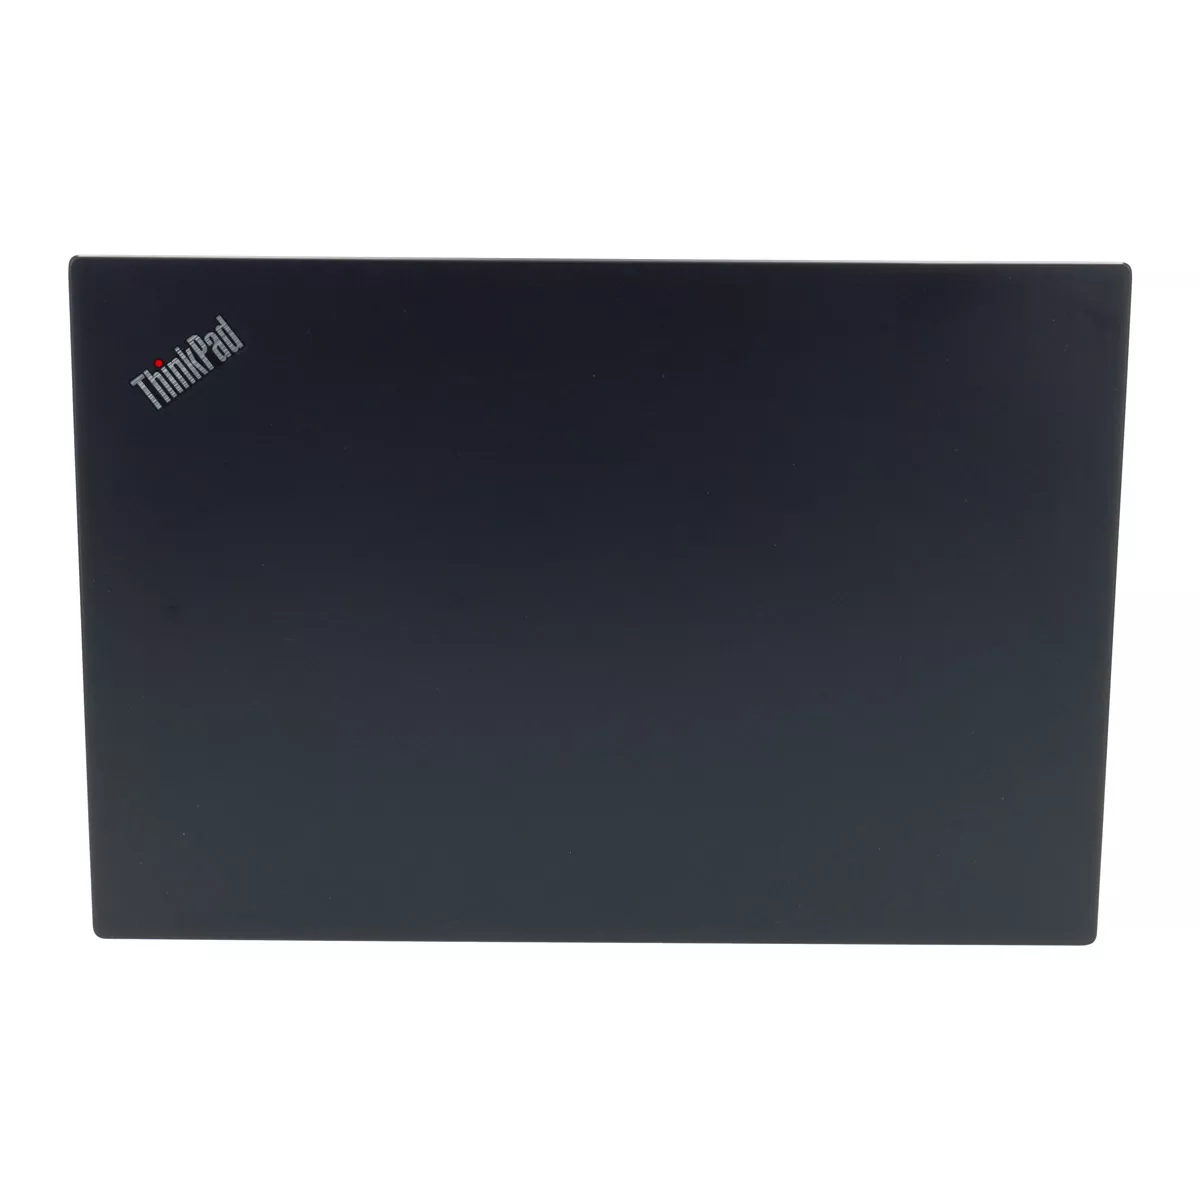 Lenovo ThinkPad T495 AMD Ryzen 5 Pro 3500U Full-HD Touch 500 GB M.2 nVME SSD Webcam A